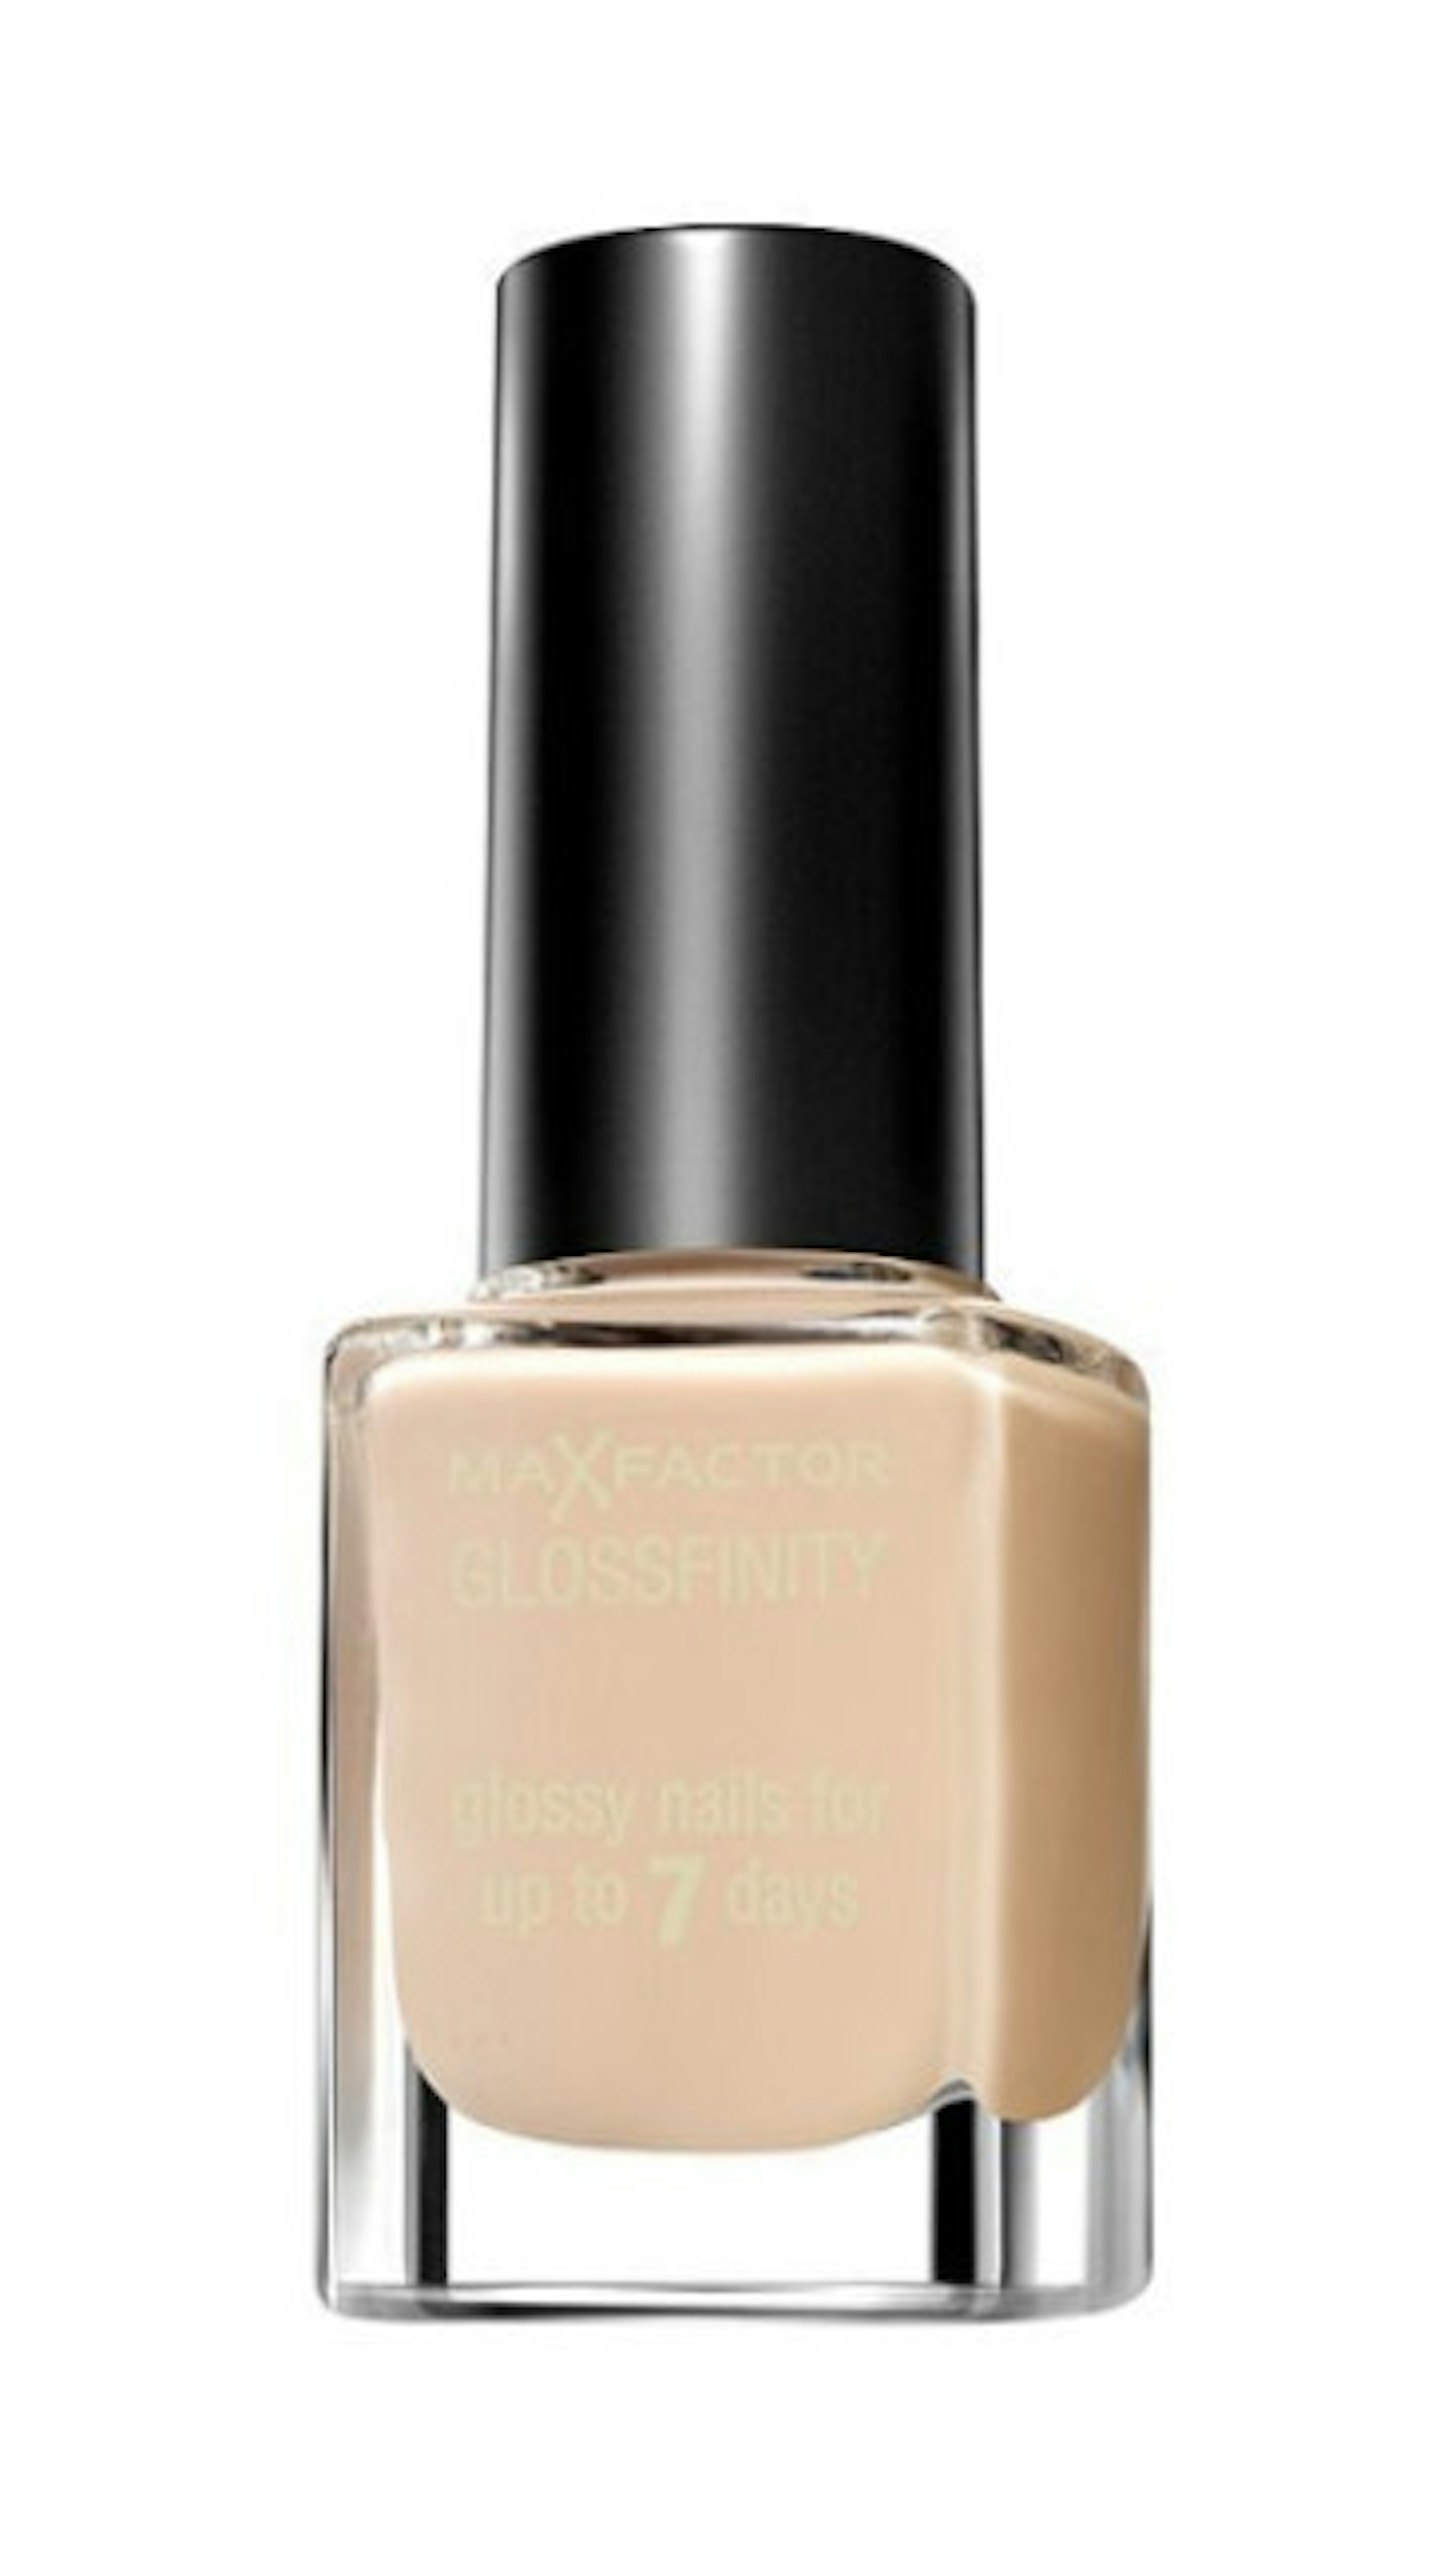 Max Factor Glossfinity Nail Polish in Desert Sand &pound;5.99